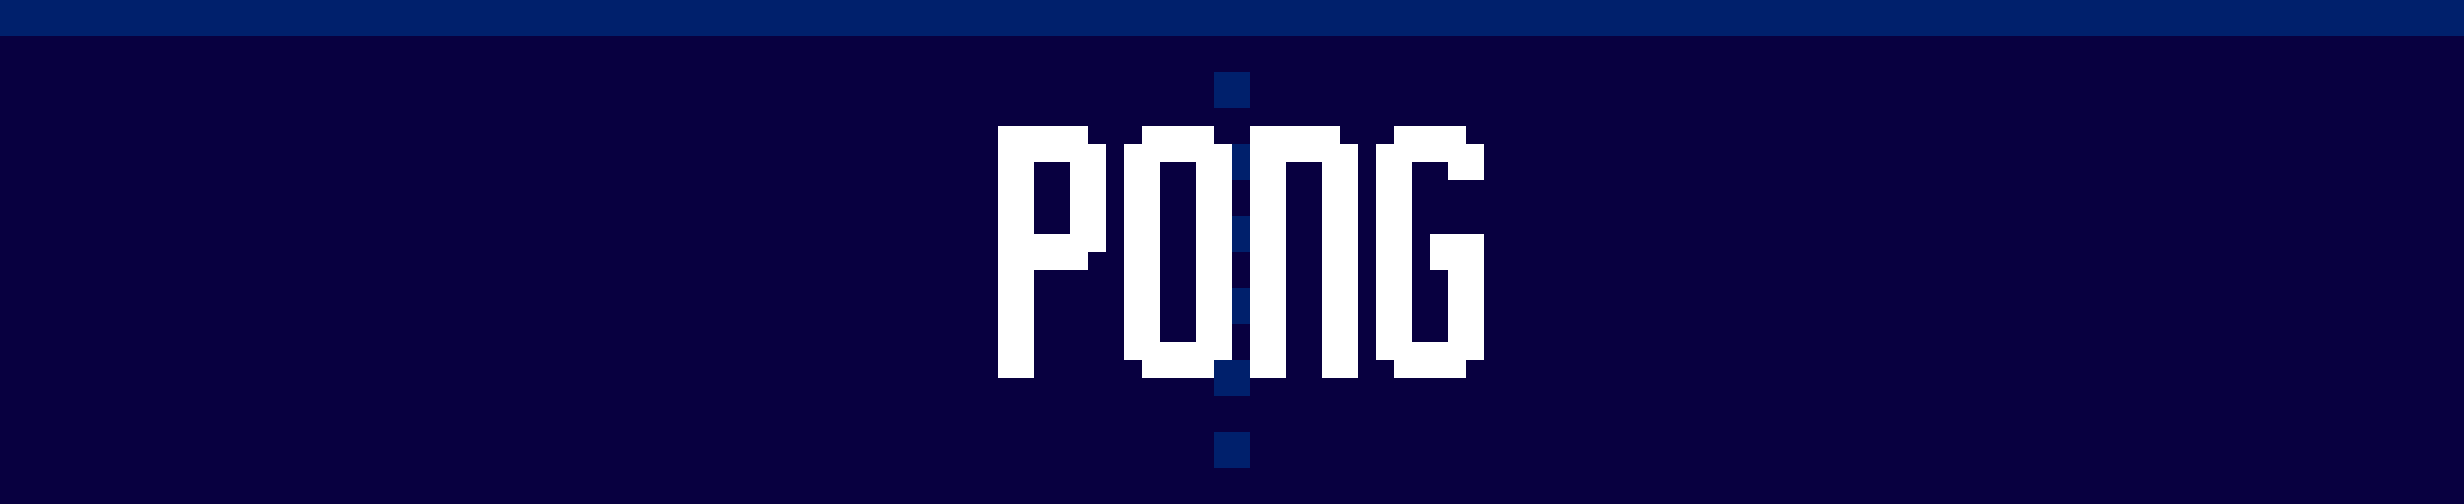 PongSprite